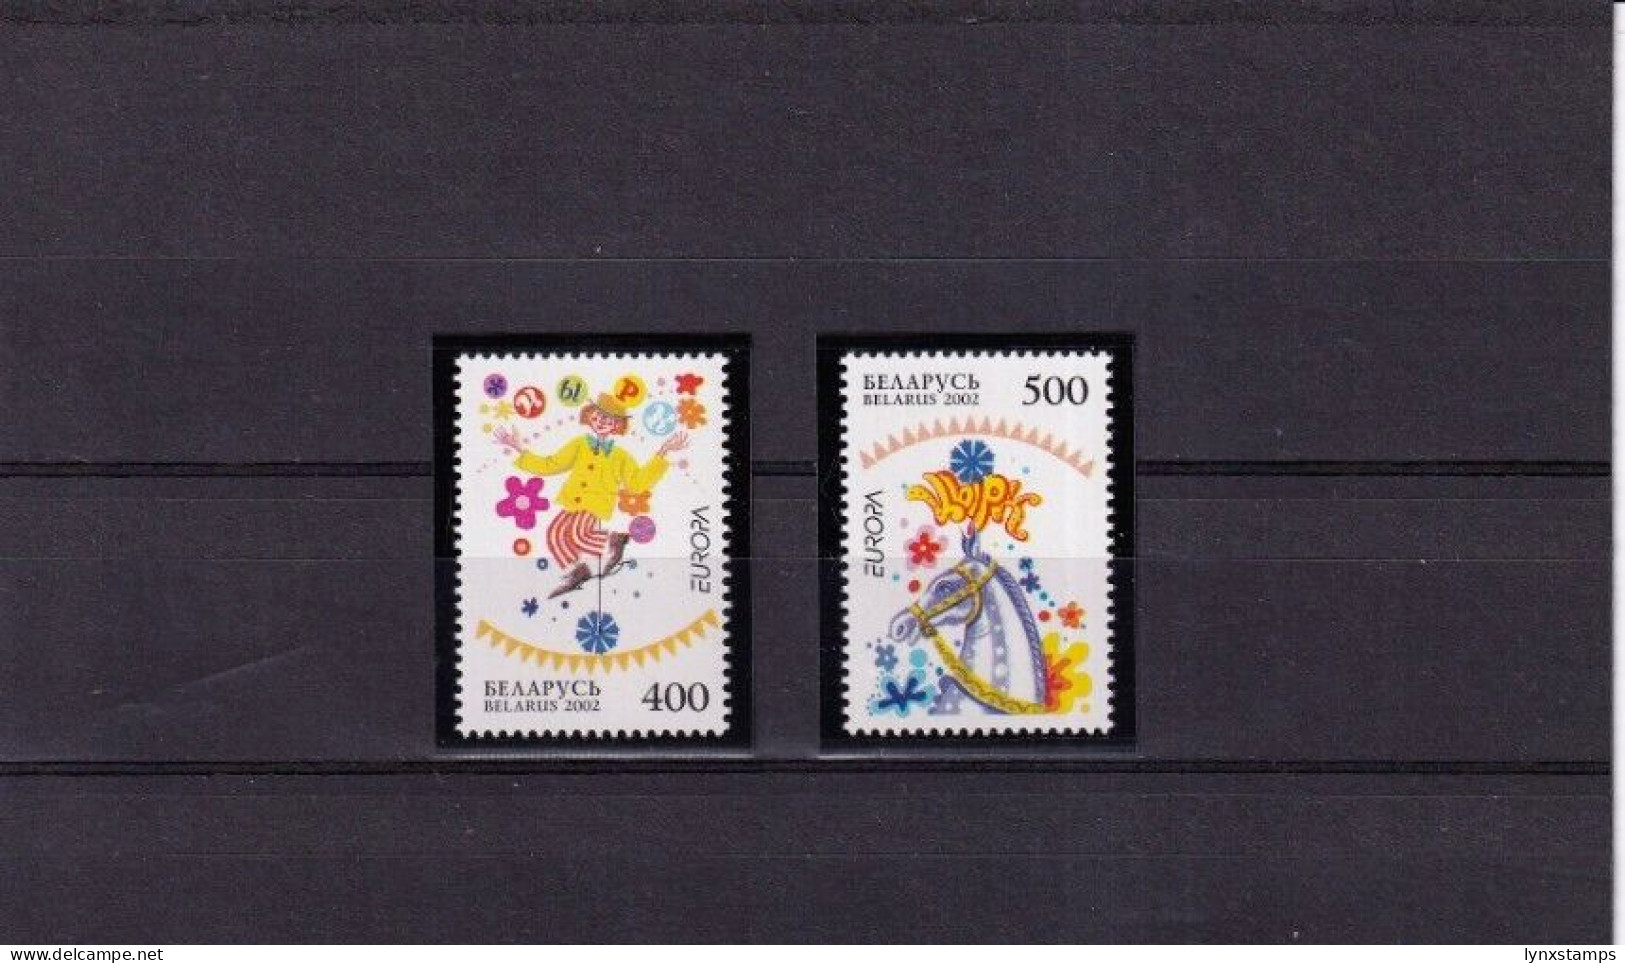 ER01 Belarus 2002 EUROPA Stamps - The Circus MNH - Belarus